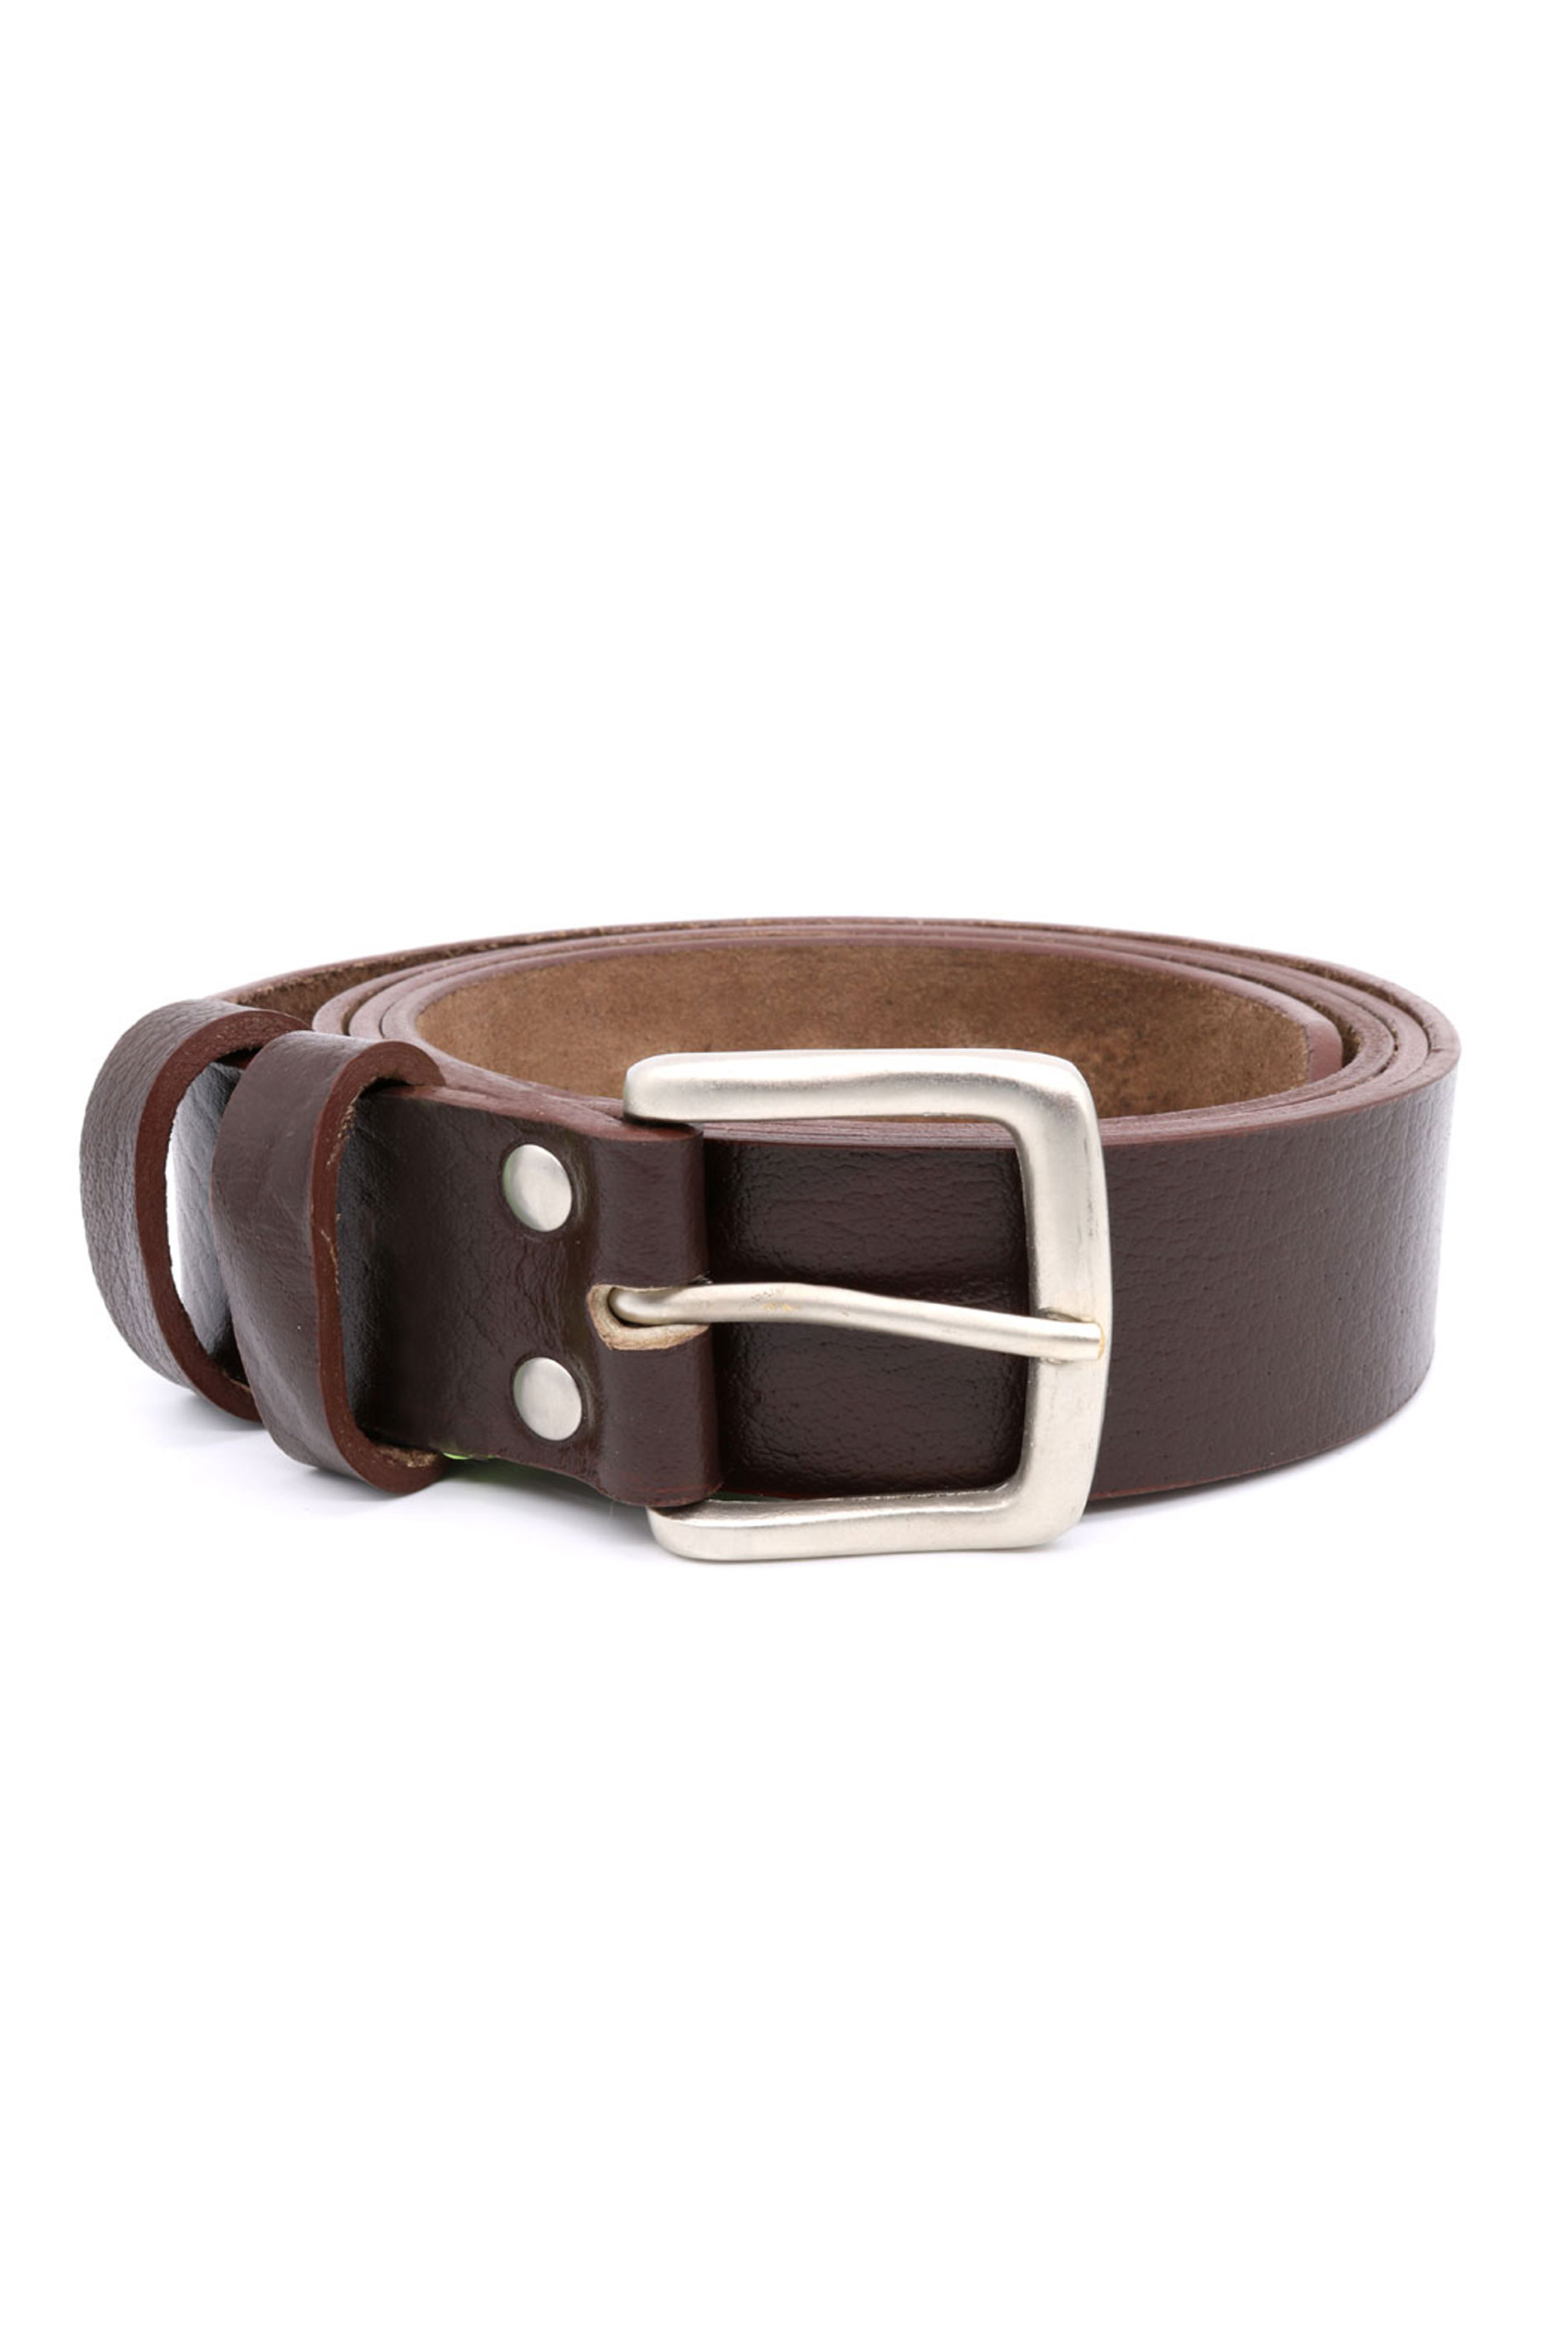 D555 Brown Leather Belt_F.jpg